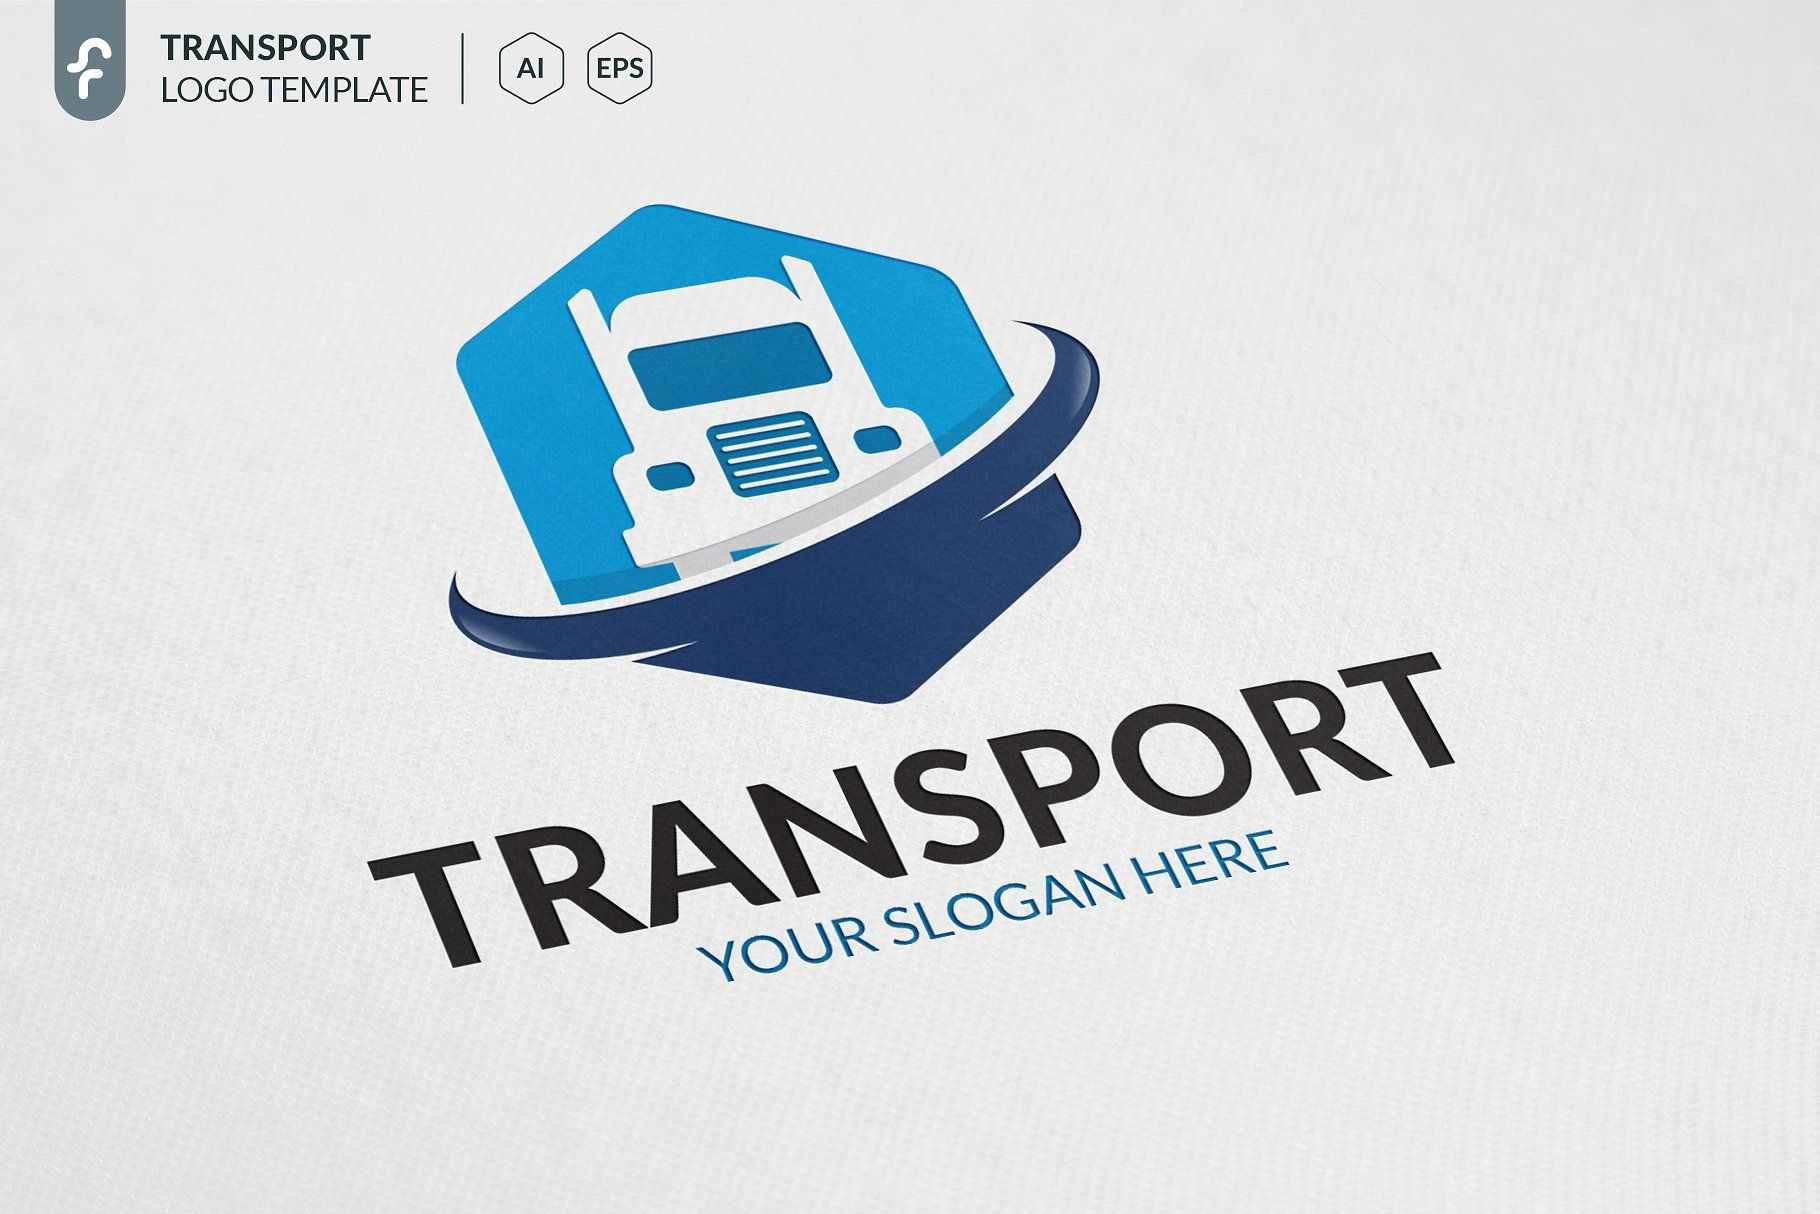 Transport Truck Logo #truck#transport#templates#logo Intended For Transport Business Cards Templates Free